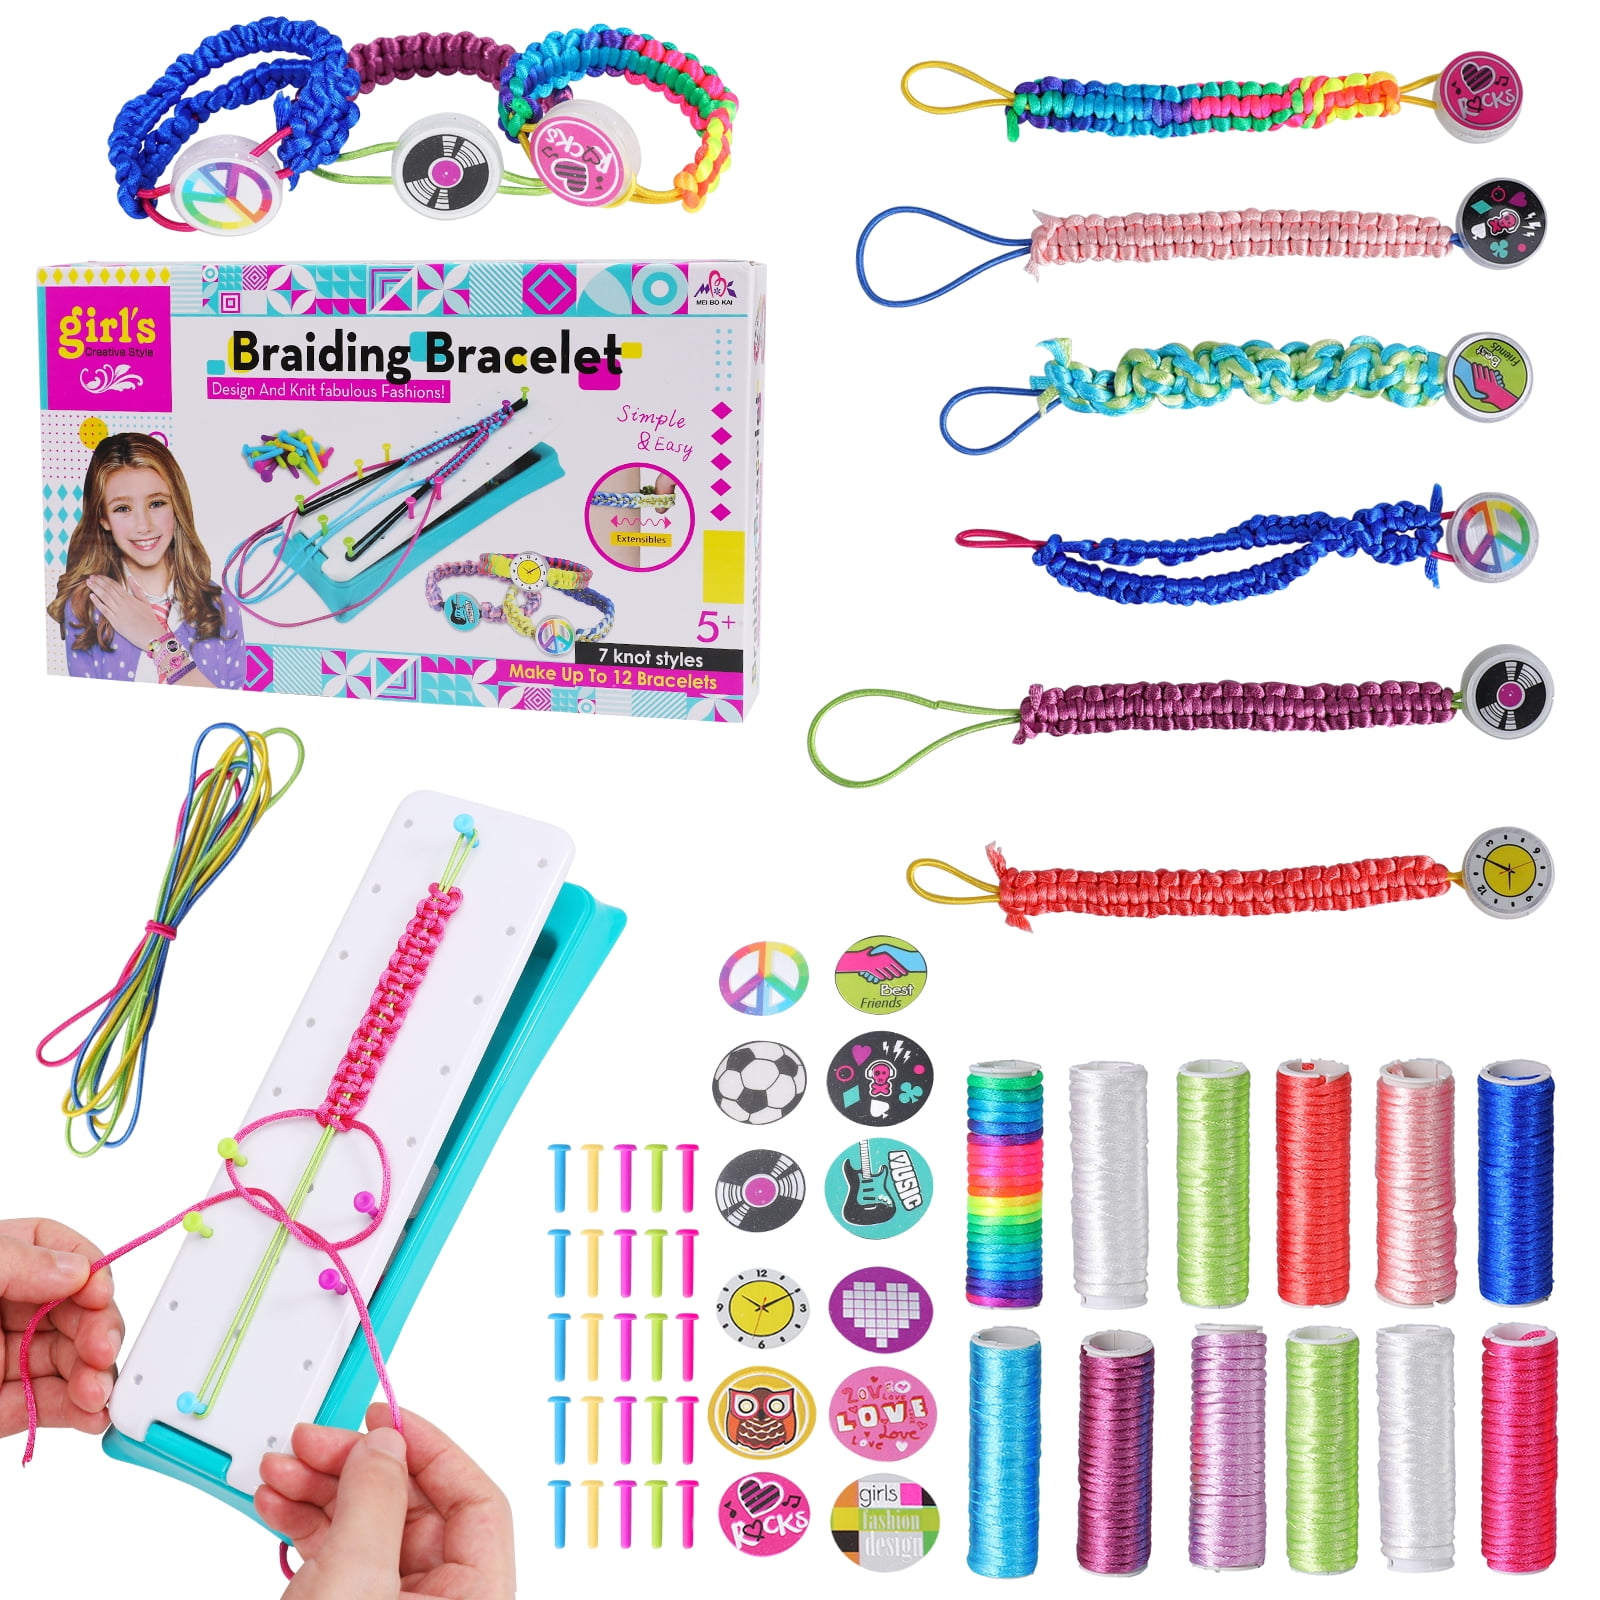 Laidan Girls Bracelet Making Kit Jewelry Making Arts for Kids Friendship DIY Bracelet Craft Kit for 3-12 Years Old Kid Girls Arts Crafts, Size: 1 Box